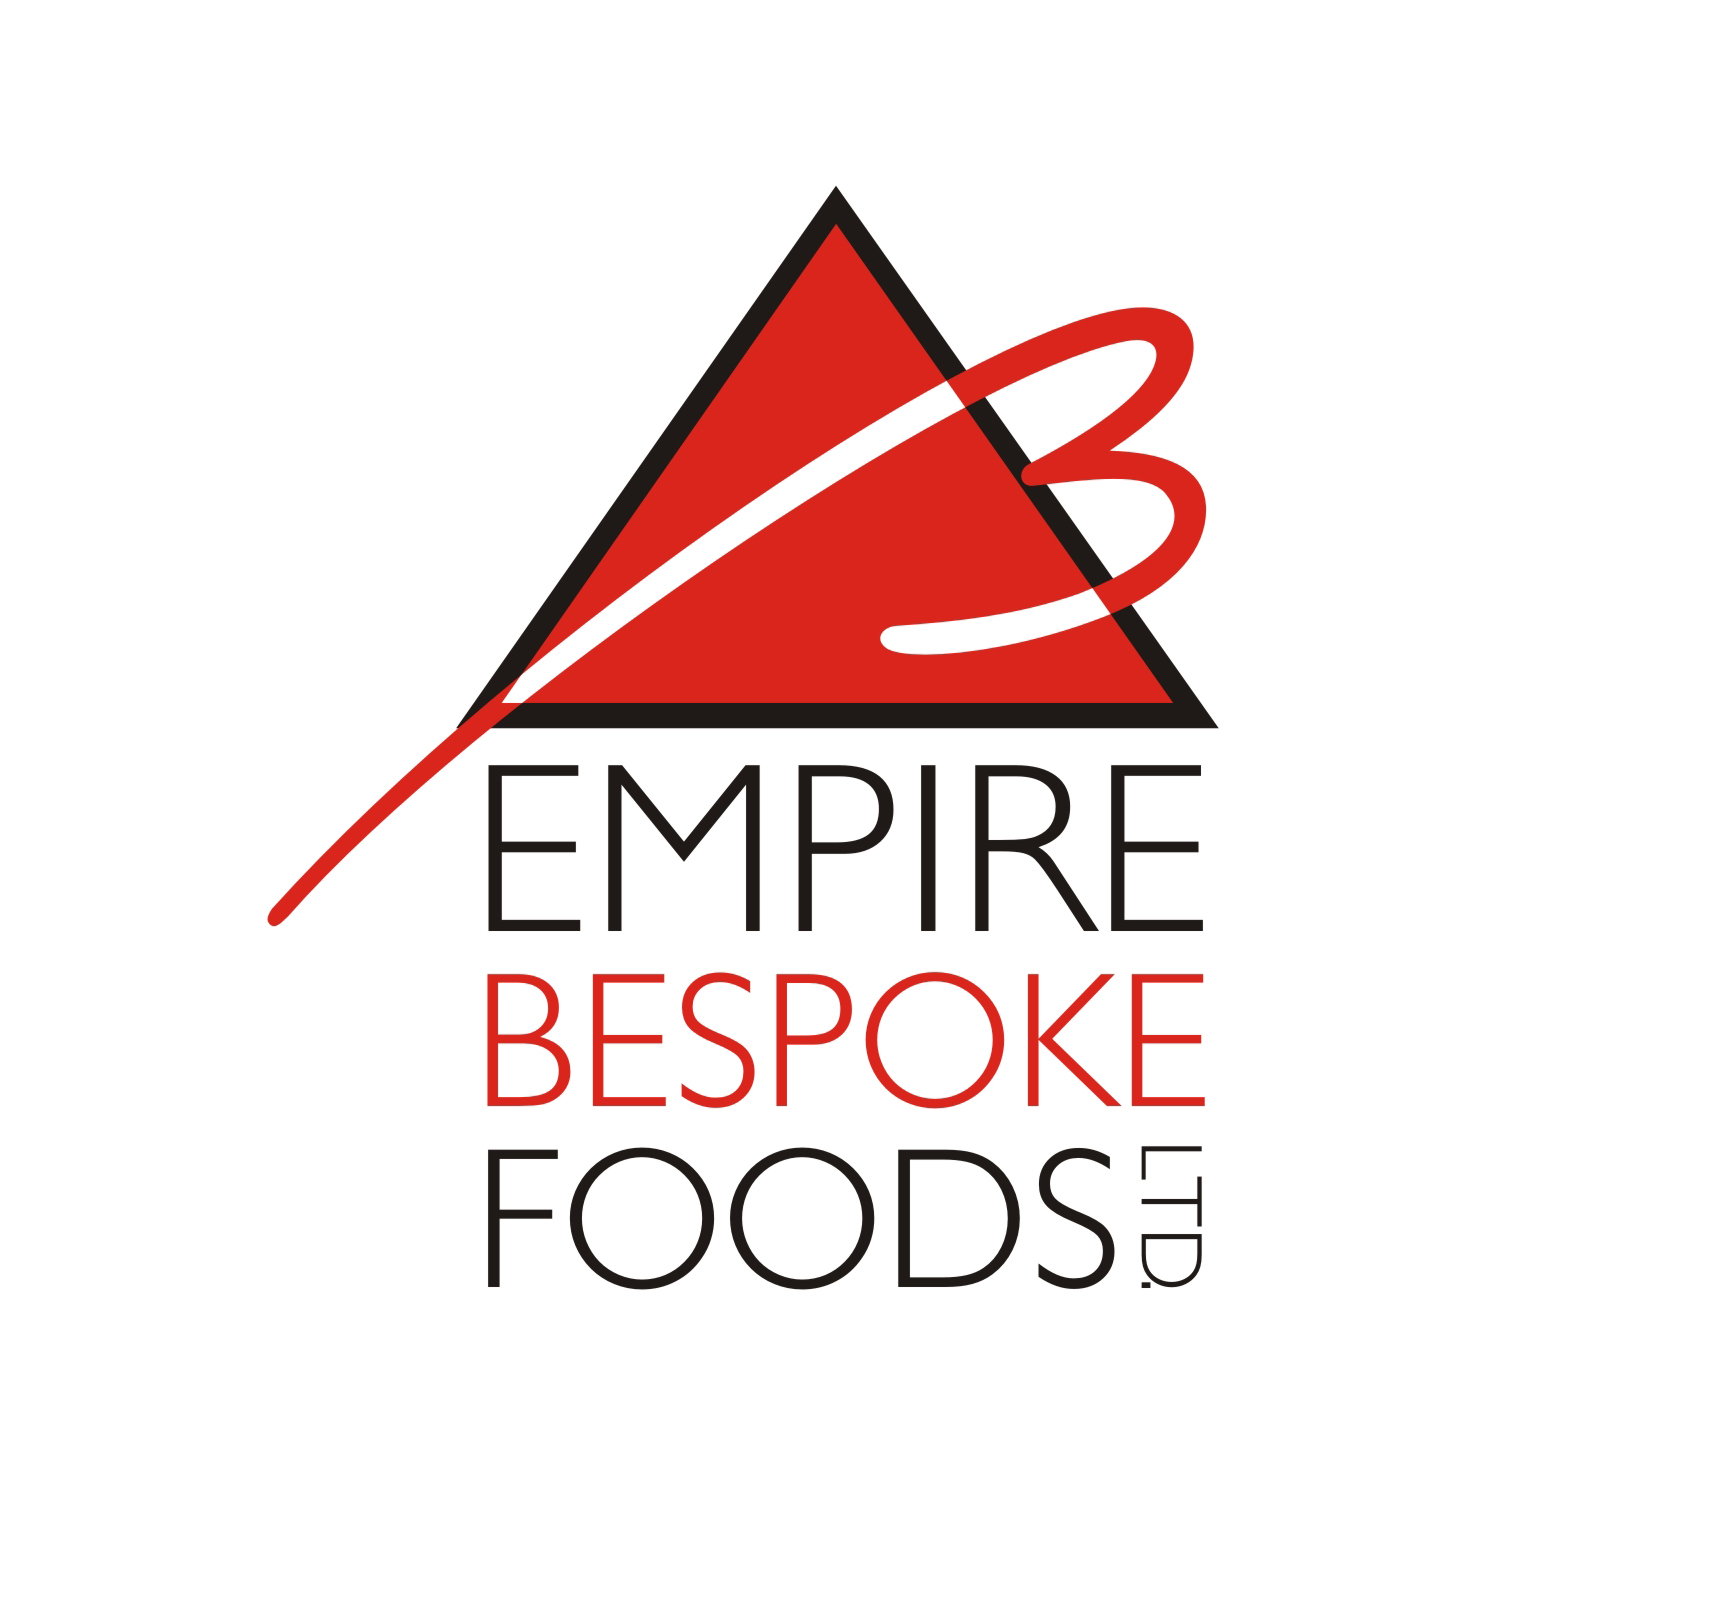 Empire Bespoke Foods Ltd